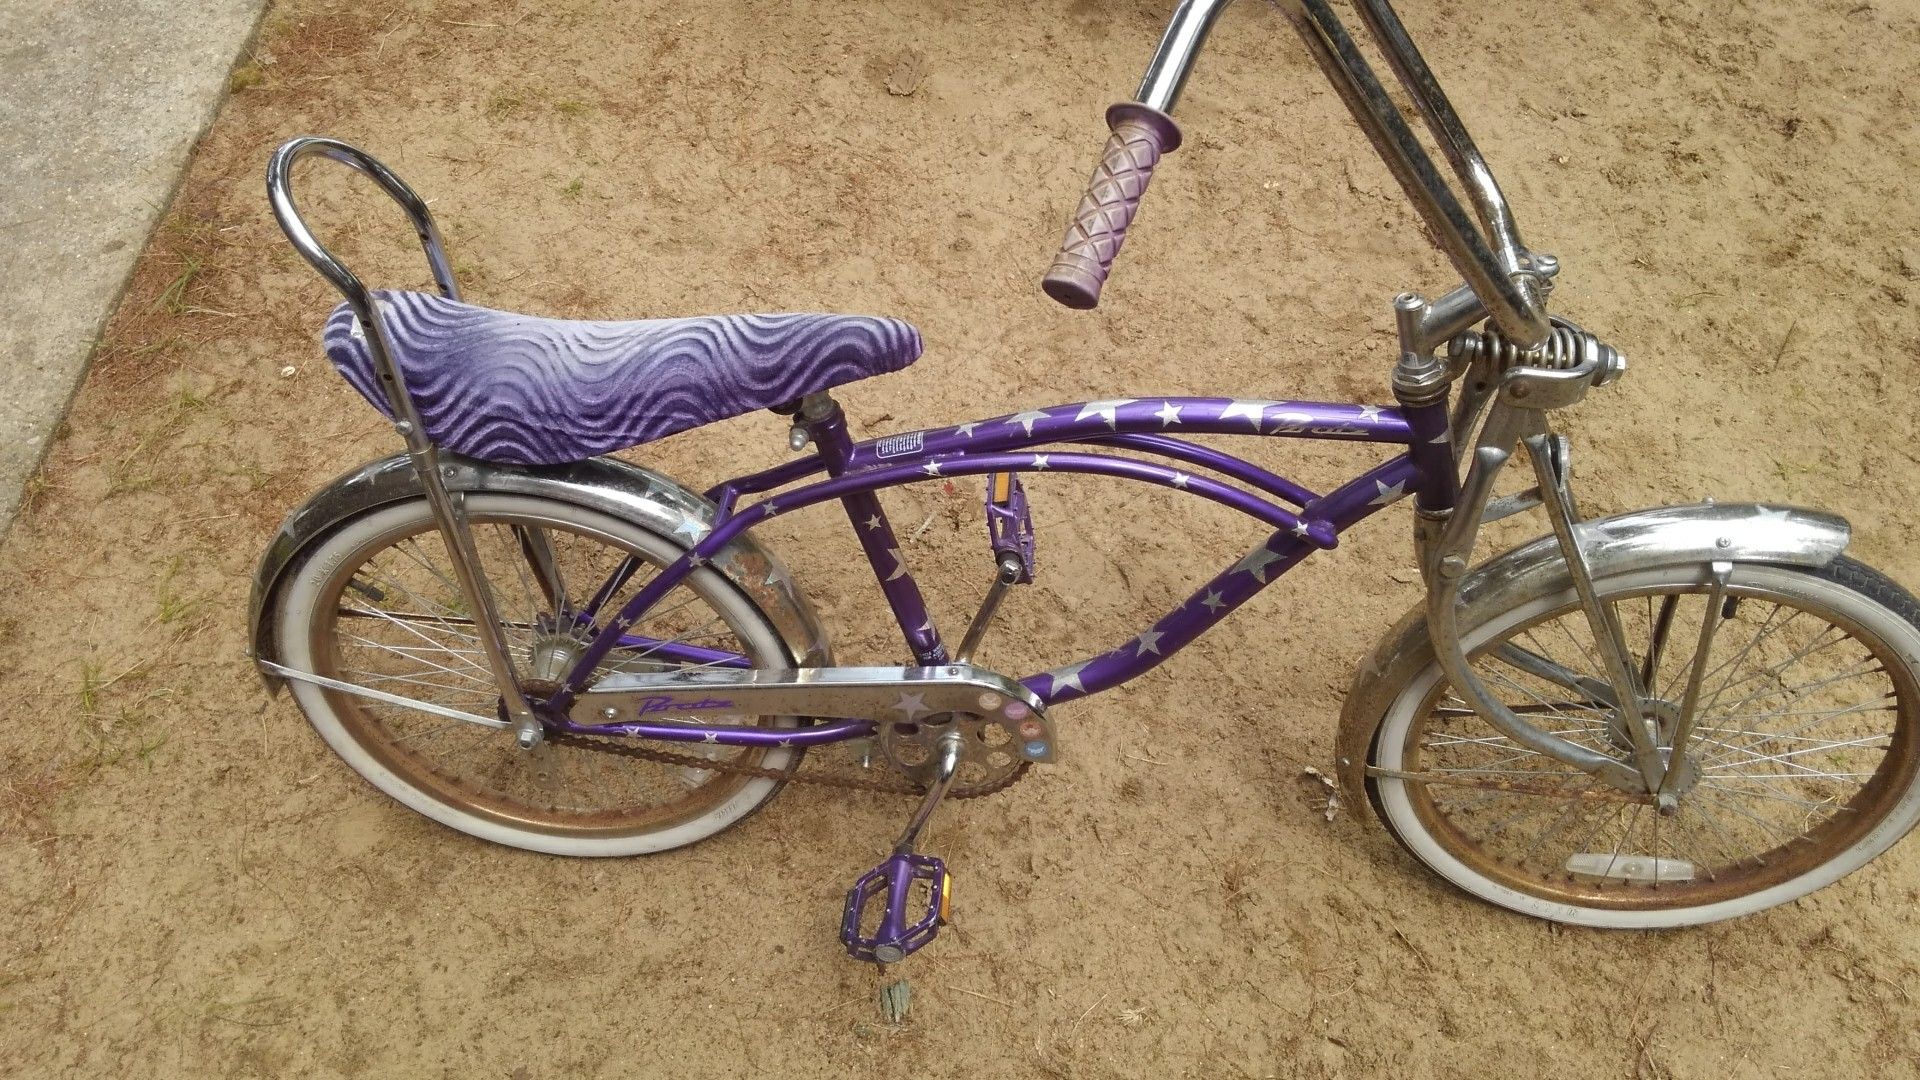 Bratz limited edition lowrider bicycle